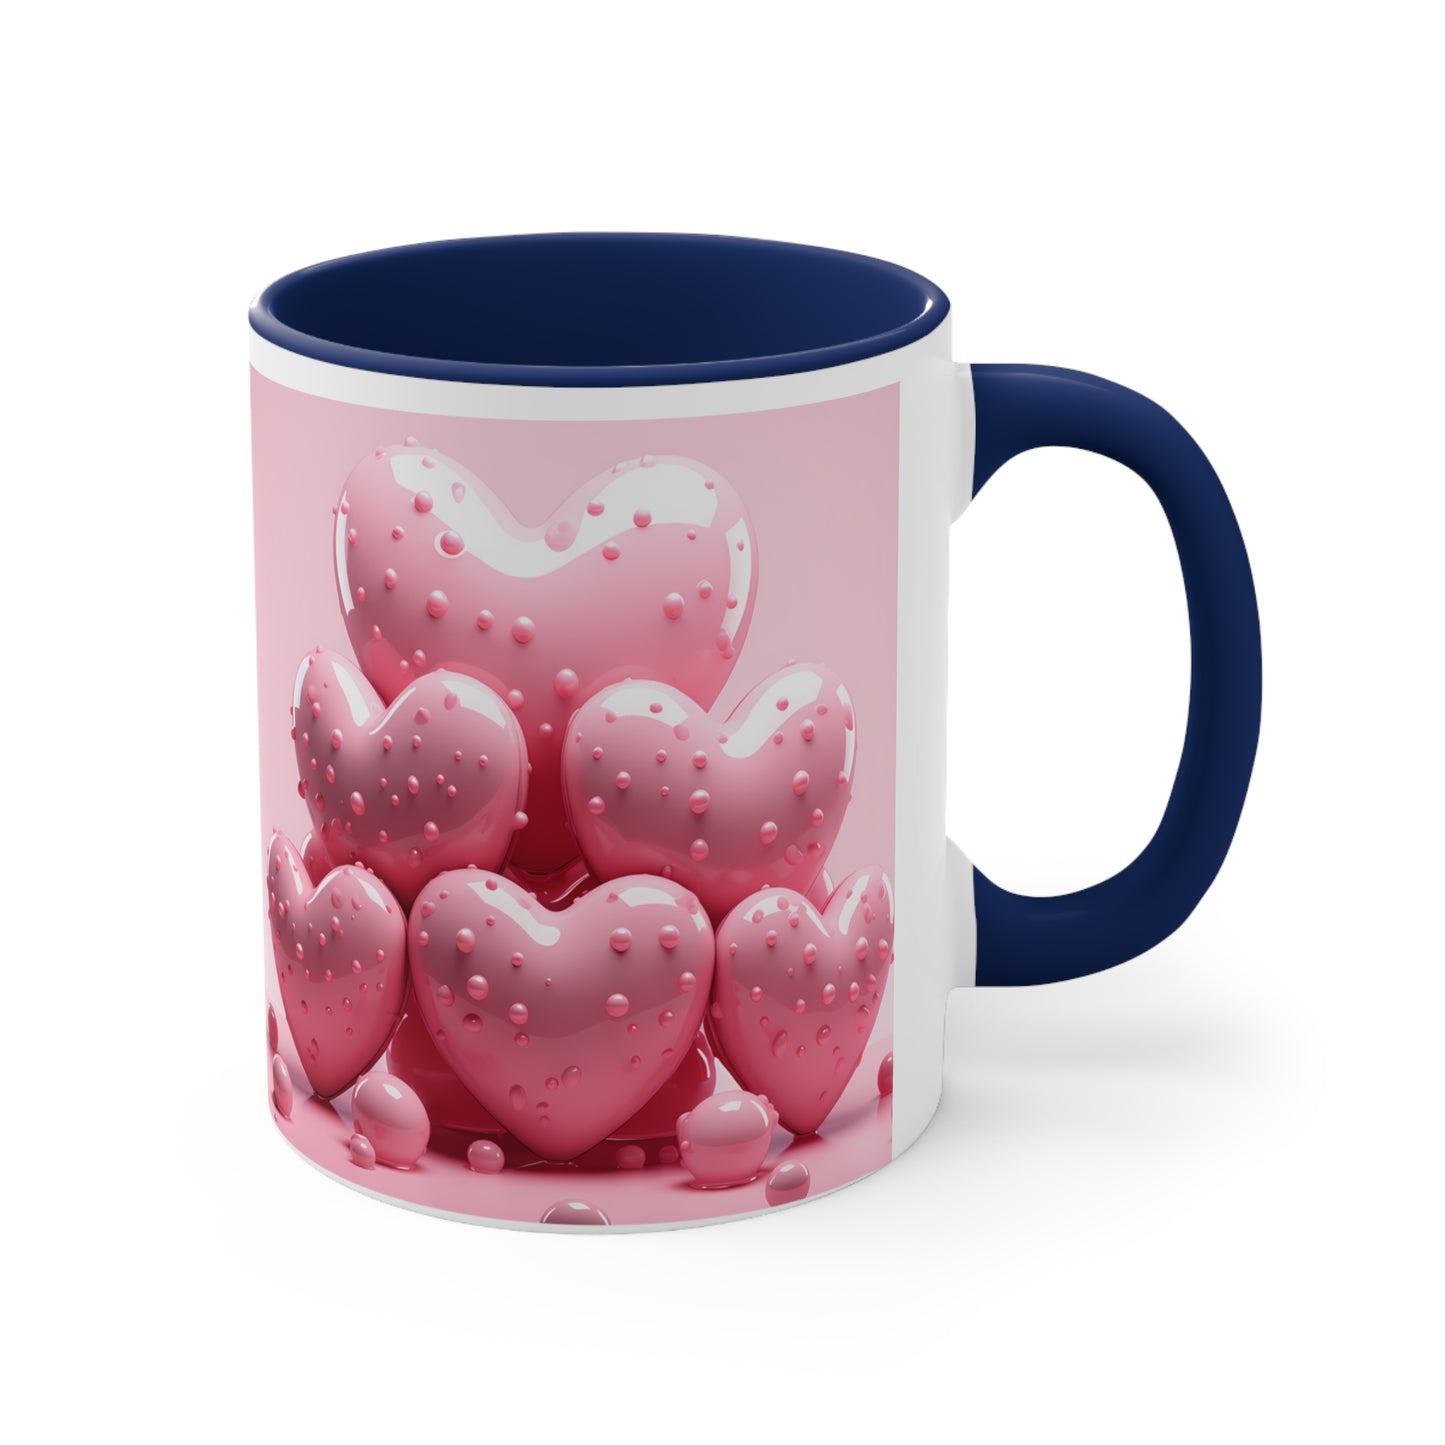 3D Valentine candy heart mug, couple mug, love heart couple mug, Funny Valentine Heart Candy, heart candy mug, conversation heart mug, Heart-Shaped Mug, Coffee Mug, 11oz